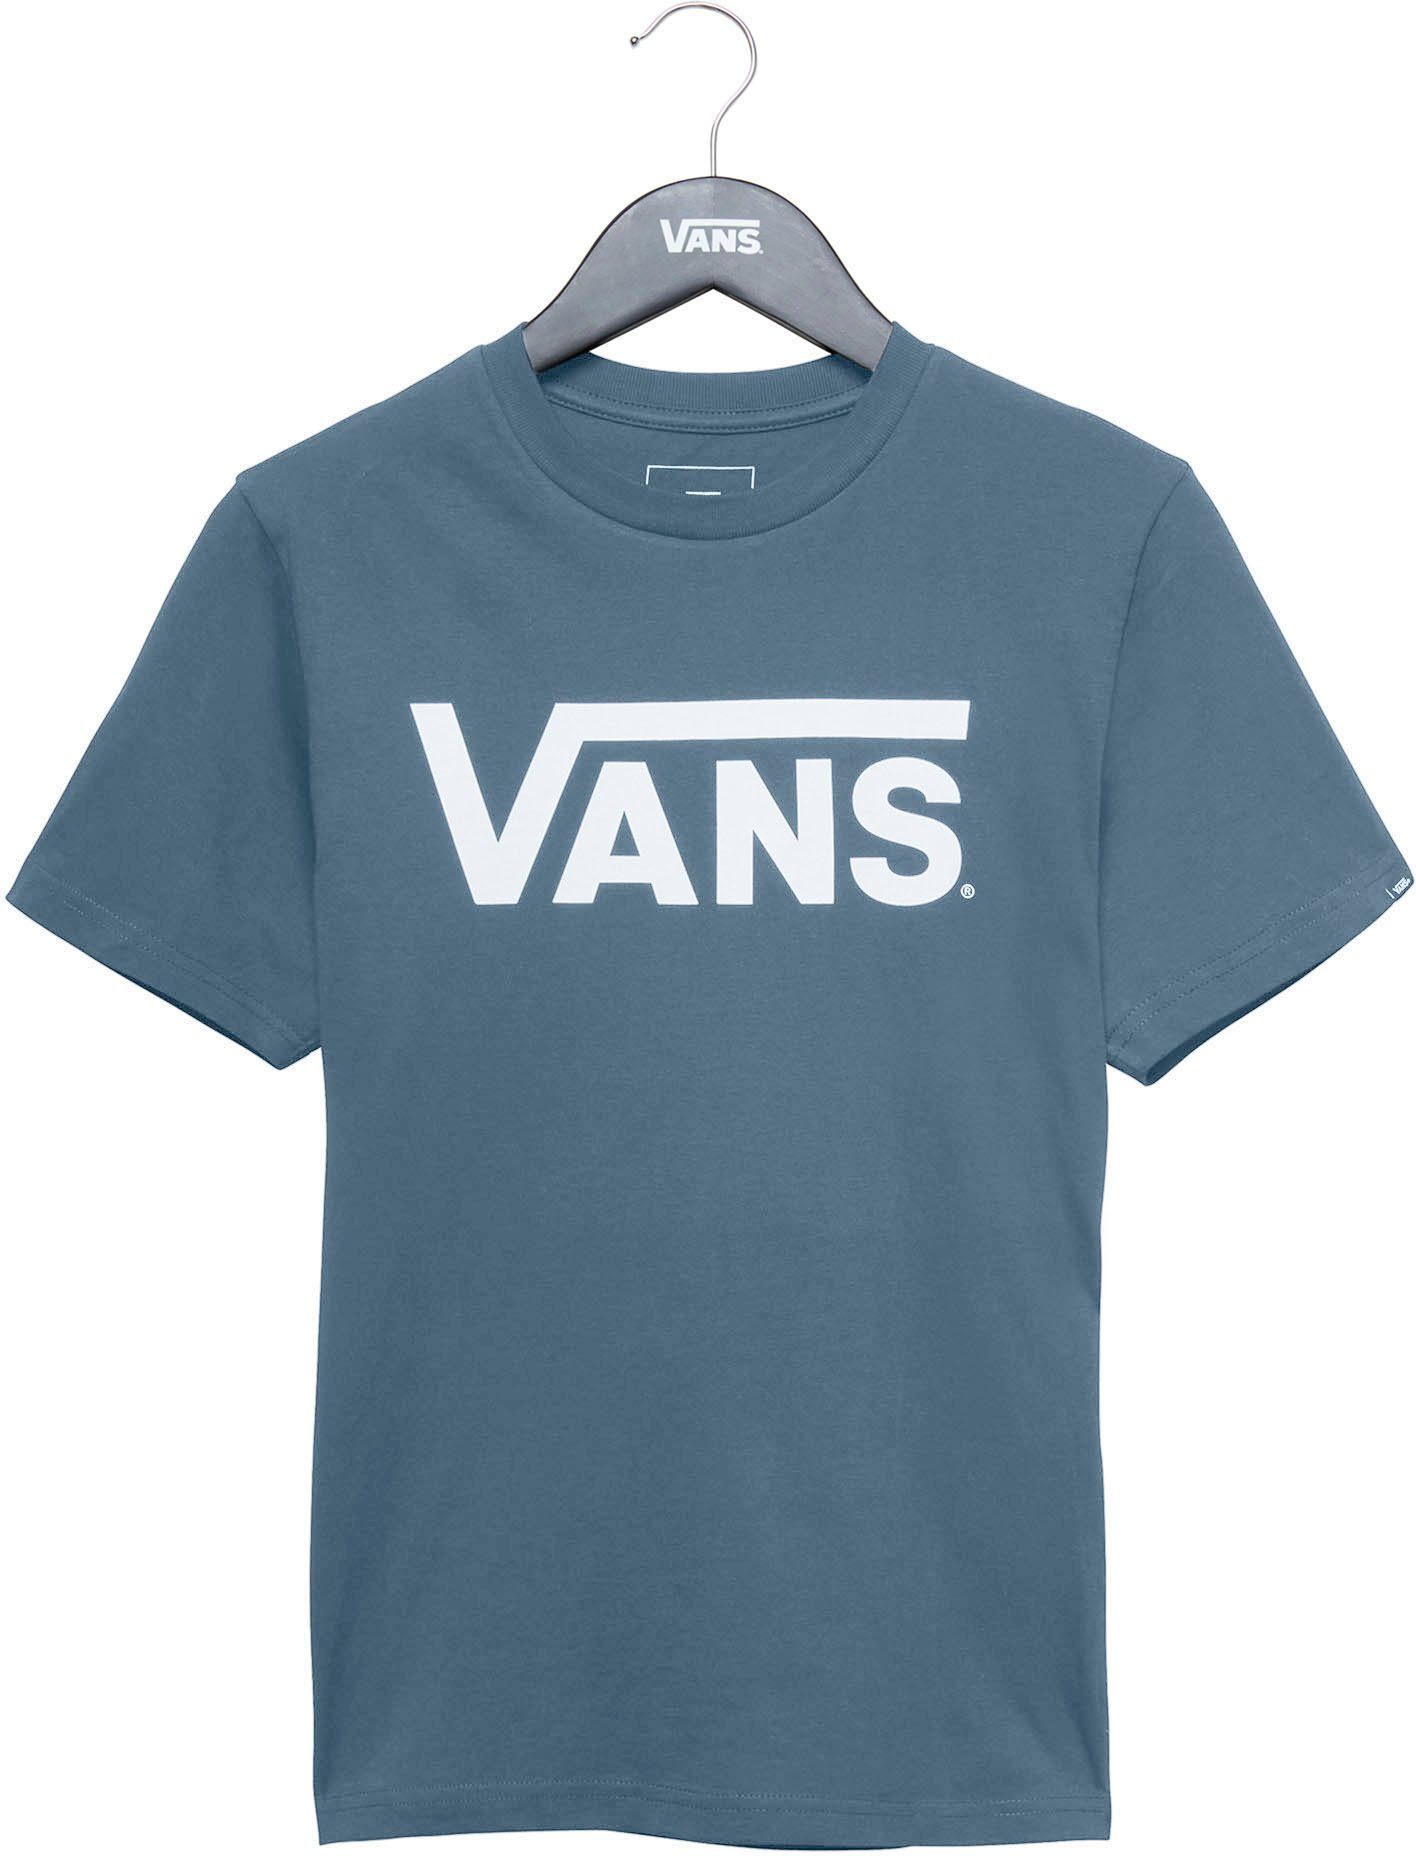 VANS T-Shirt KIDS Vans blau CLASSIC